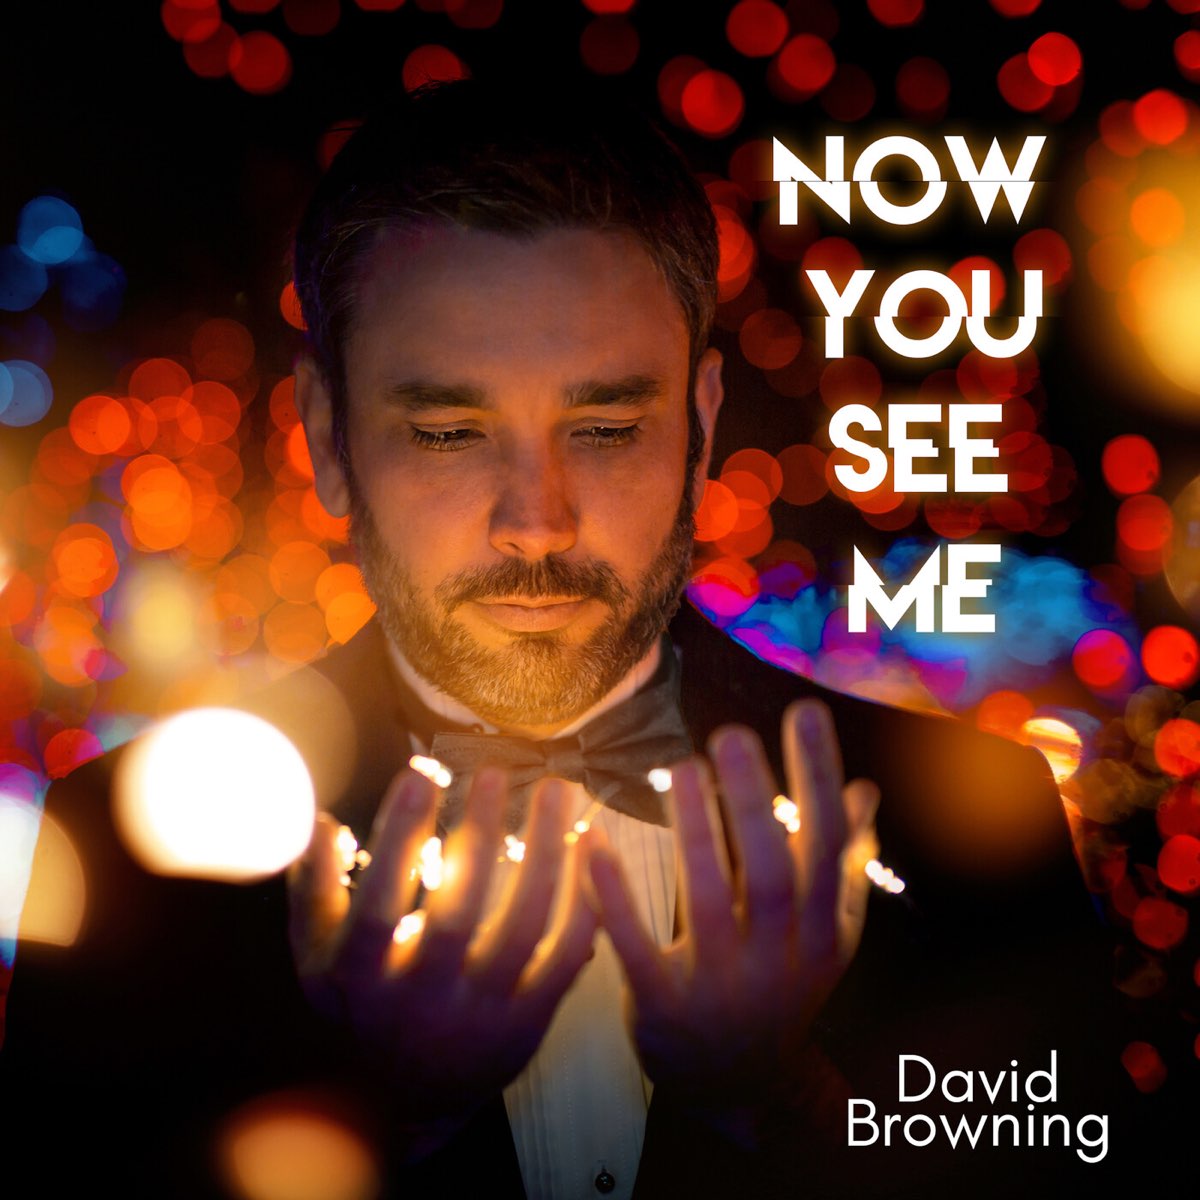 David browning